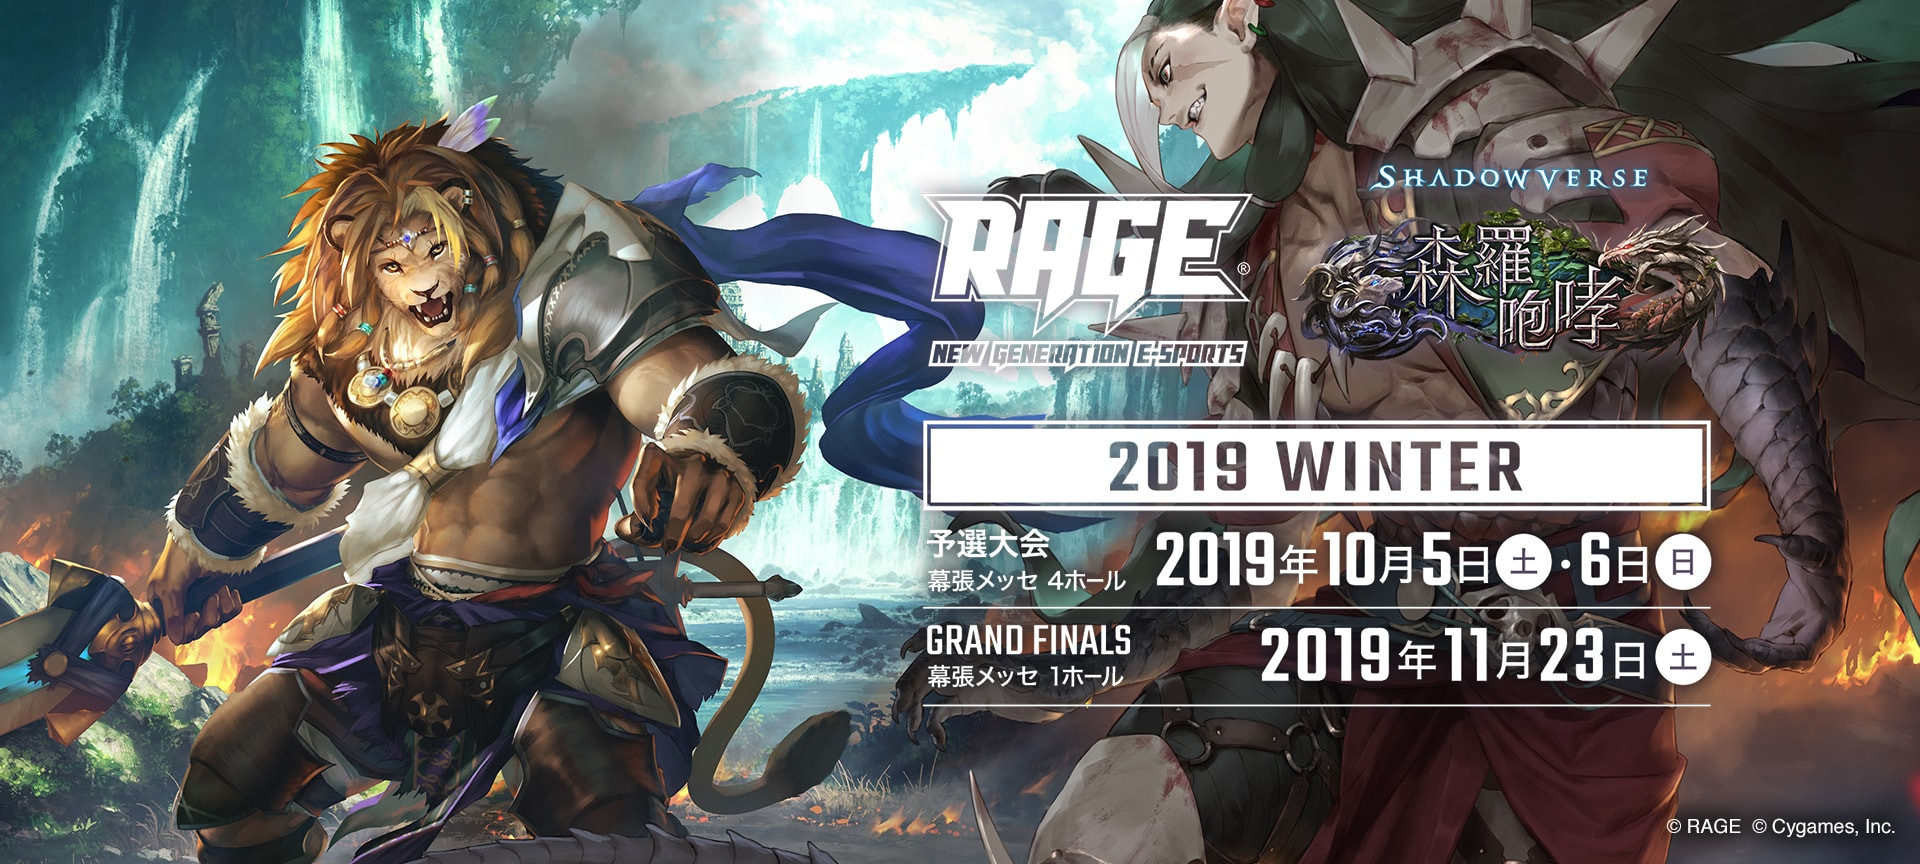 Rage Shadowverse 19 Winter 予選大会 Esports World Eスポーツワールド